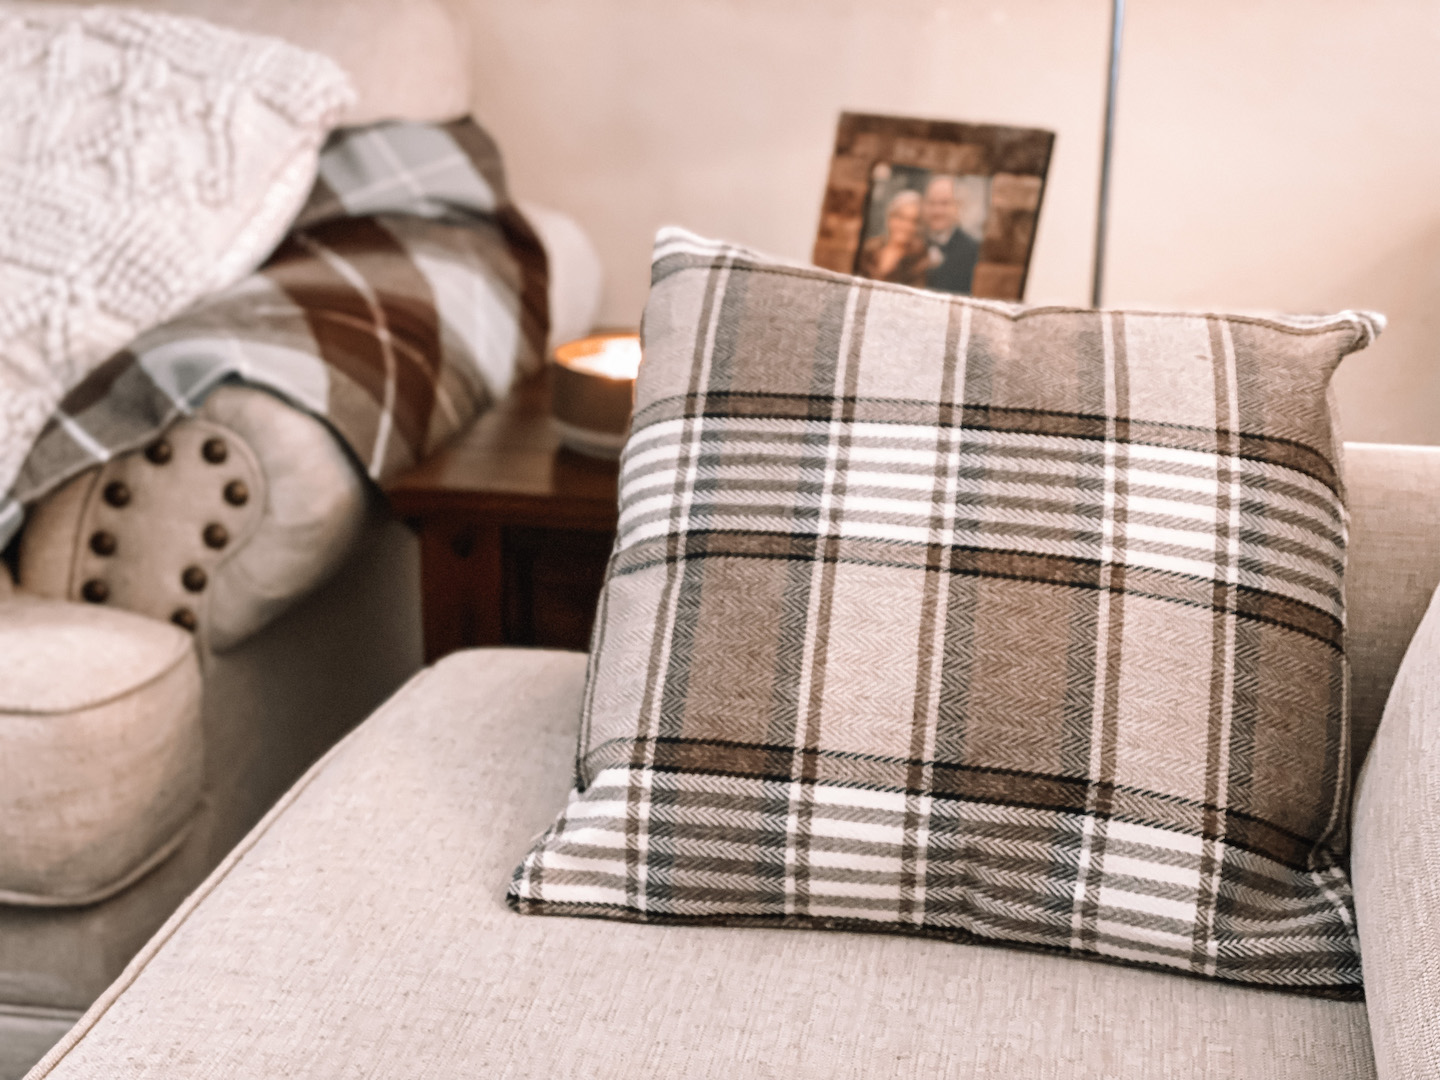 Cozy Fall Pillows for Home | 2021 Fall Home Decor Trends